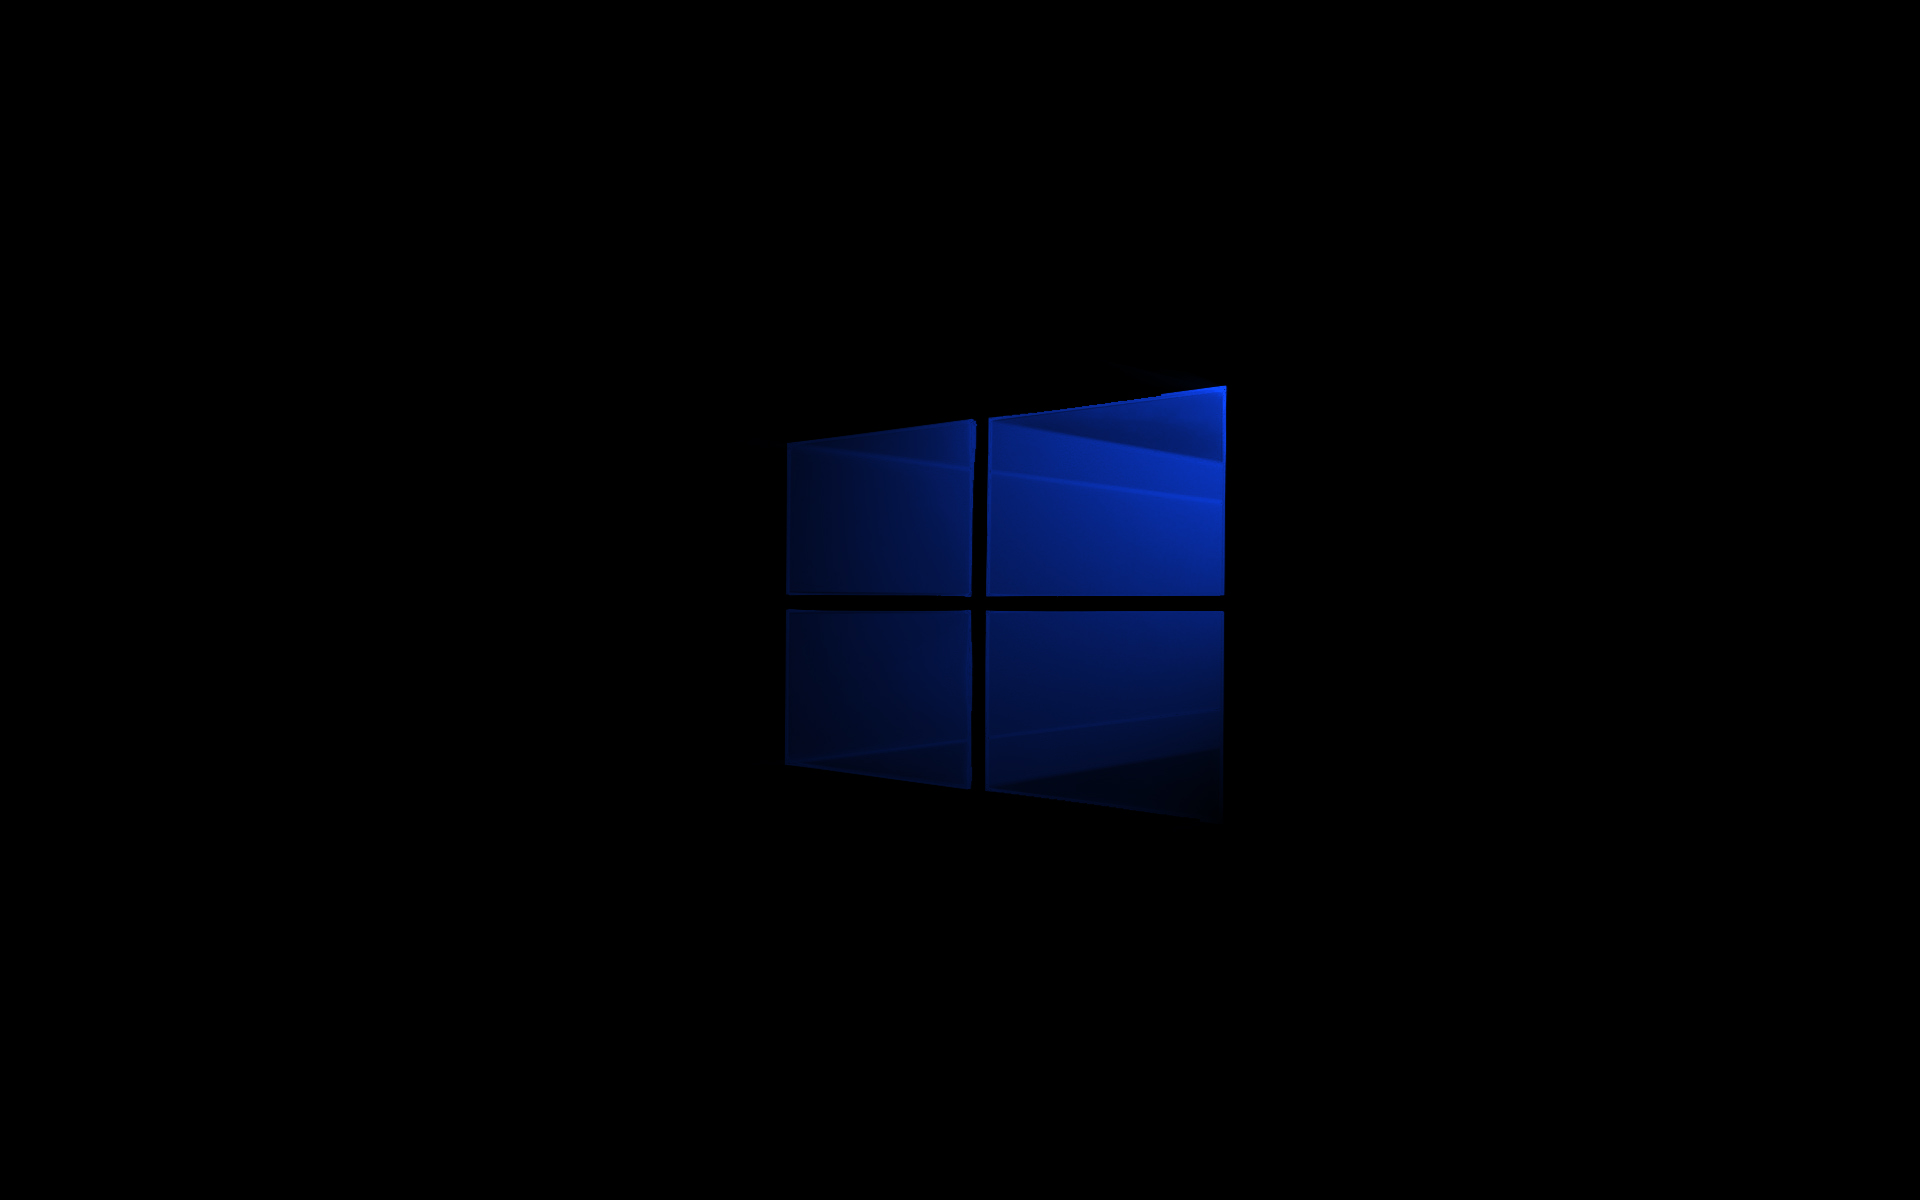 Minimal Windows 10 wallpaper by arcadiogarcia on DeviantArt